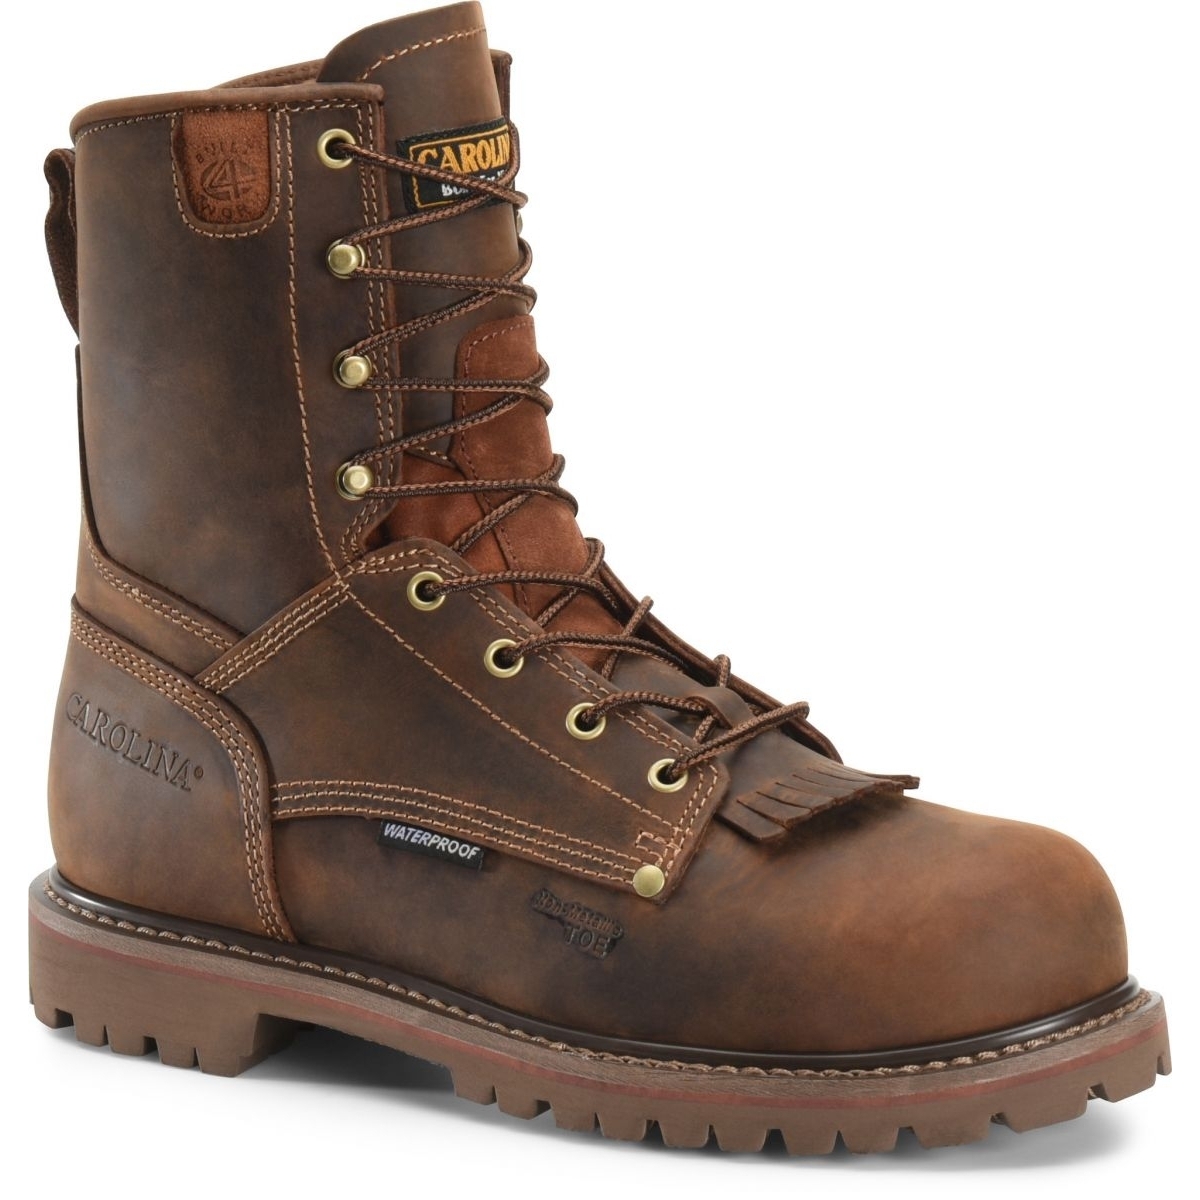 CAROLINA Men's 28 Series 8 Composite Toe Waterproof Work Boot Brown - CA8528 DARK BROWN - DARK BROWN, 10.5 Wide